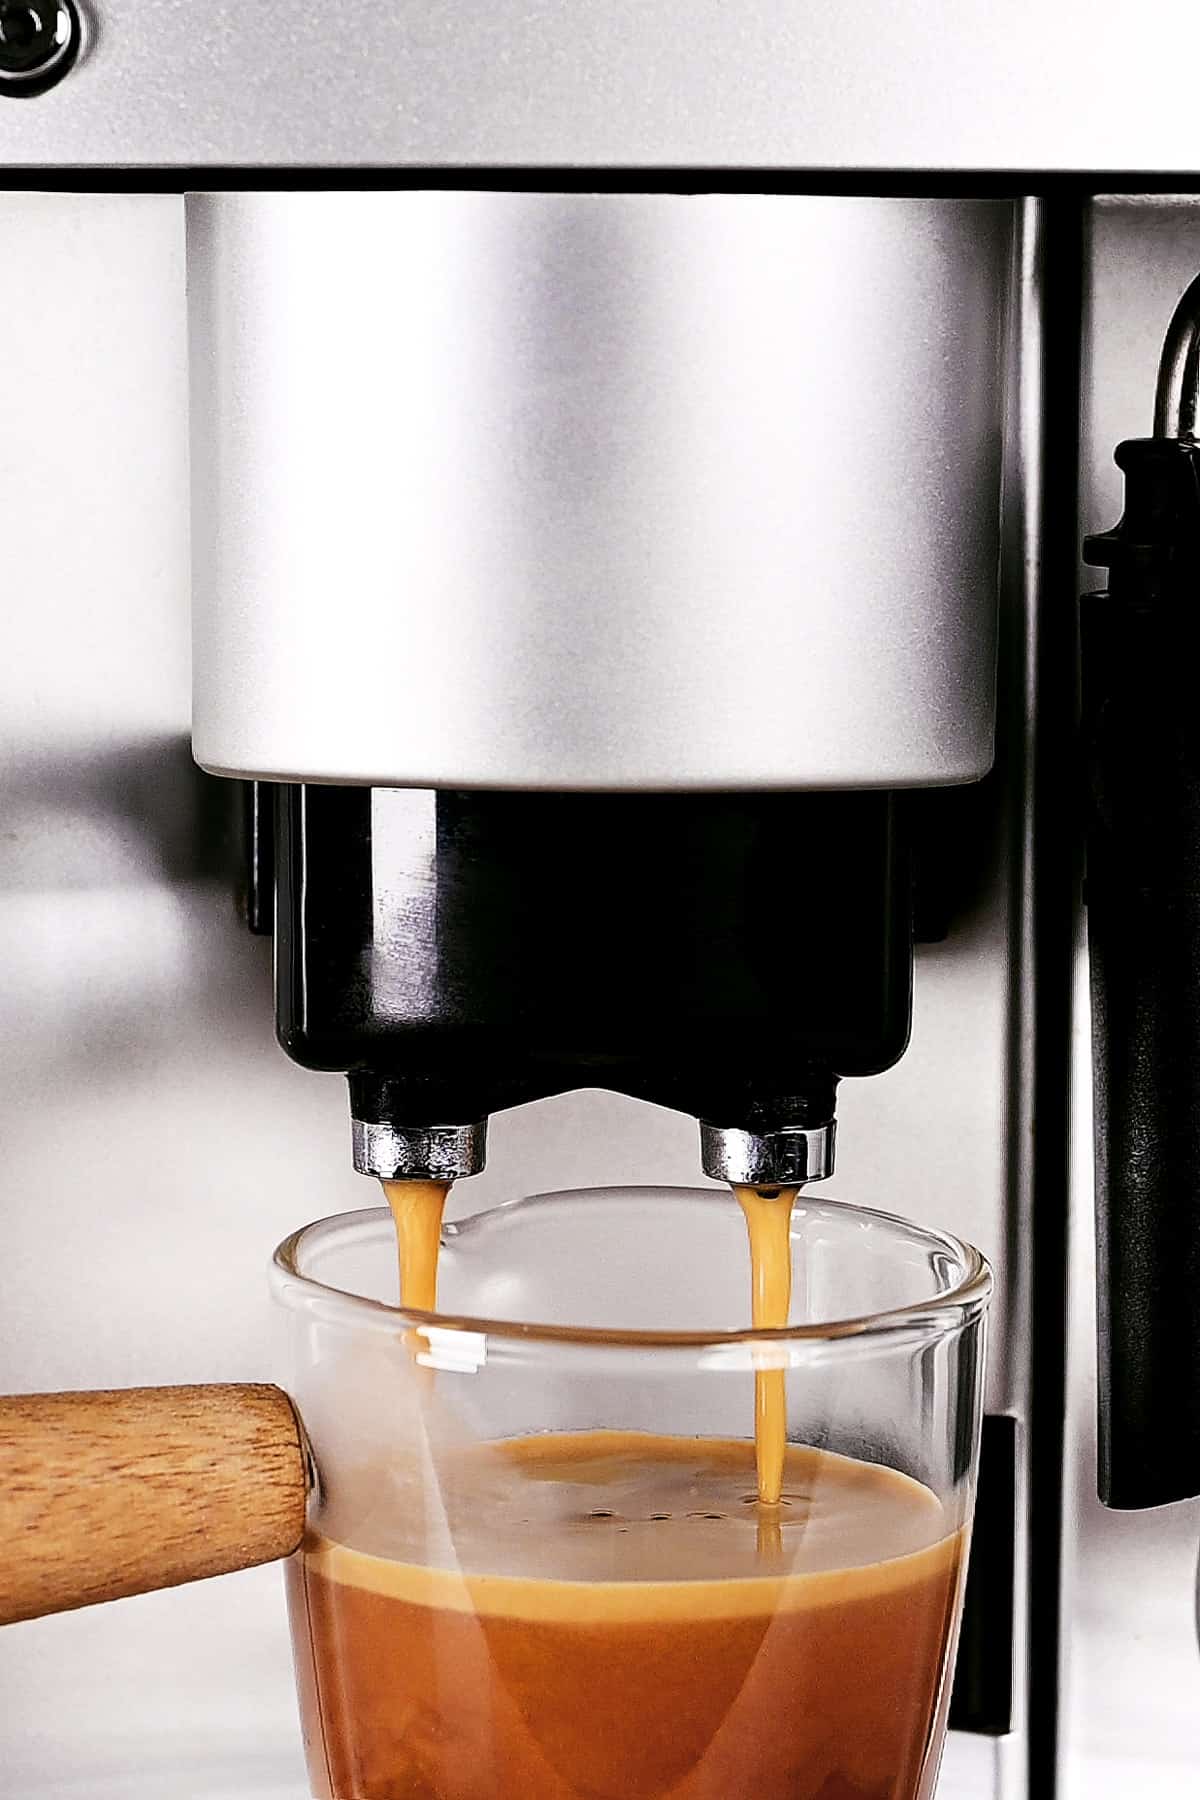 Espresso from a machine.